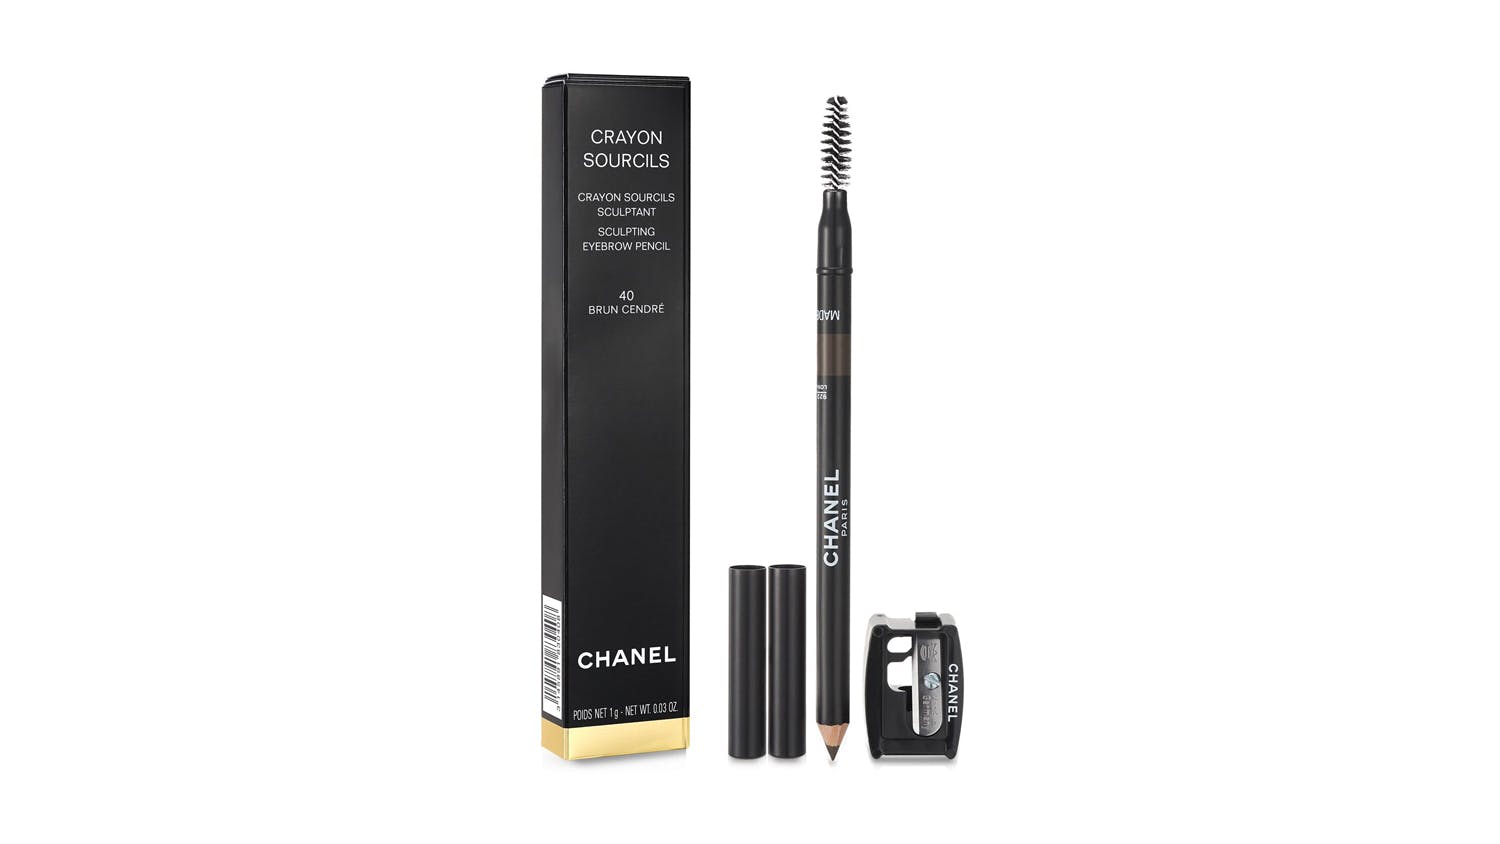 3 x Chanel Le Volume de Chanel Mascara 10 NOIR BLACK 1g / 0.03oz each